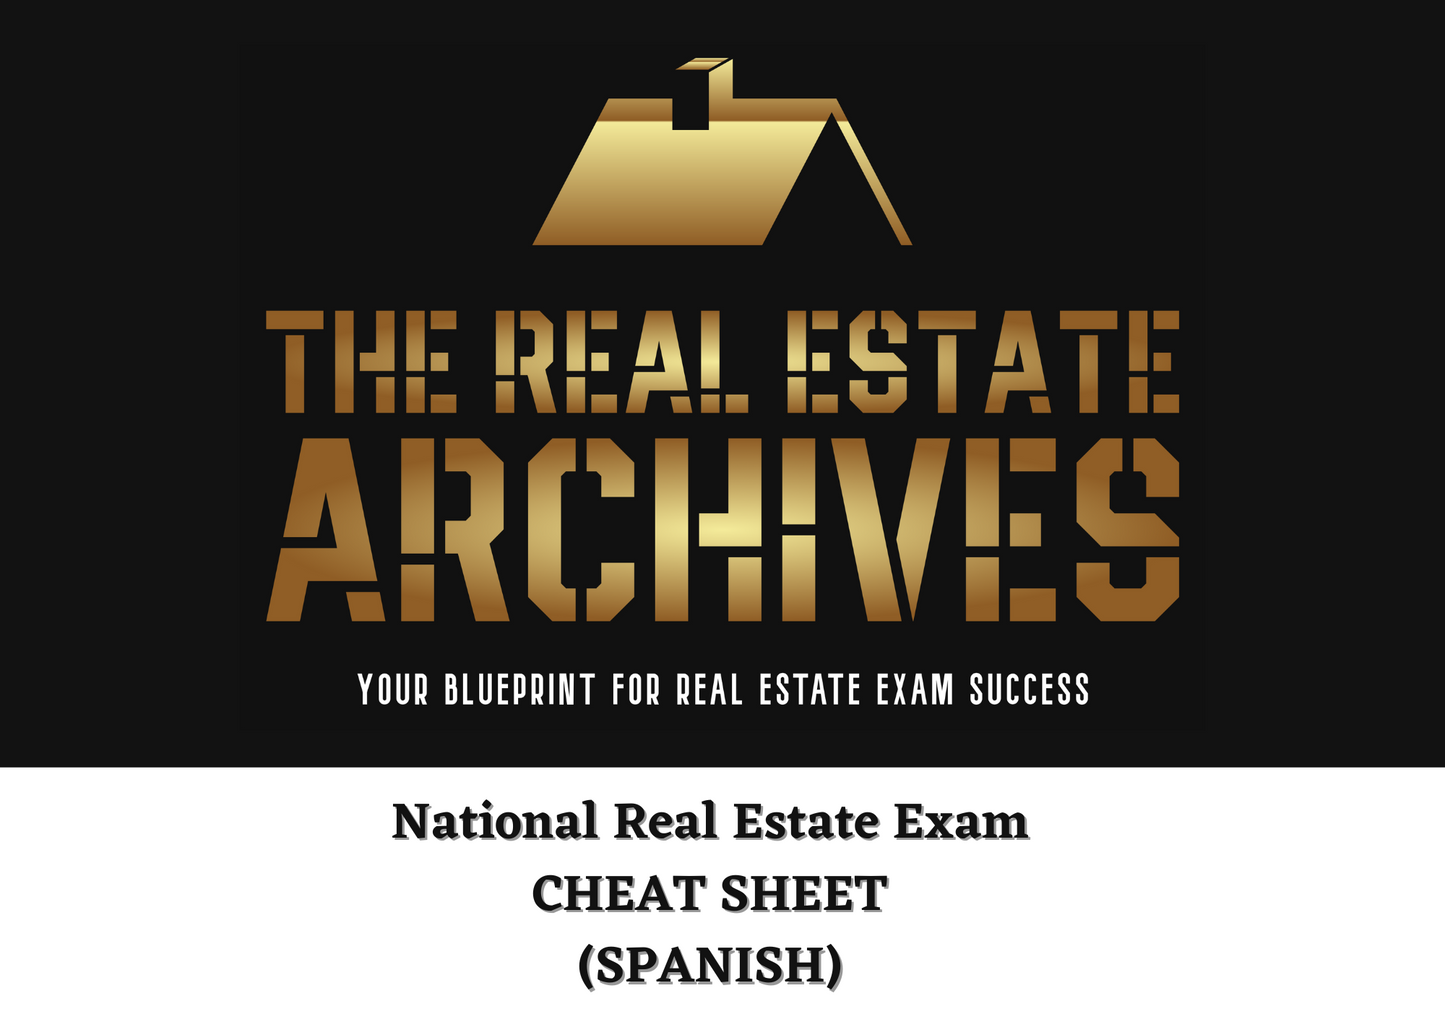 National Real Estate Exam "Cheat Sheet" (Spanish)